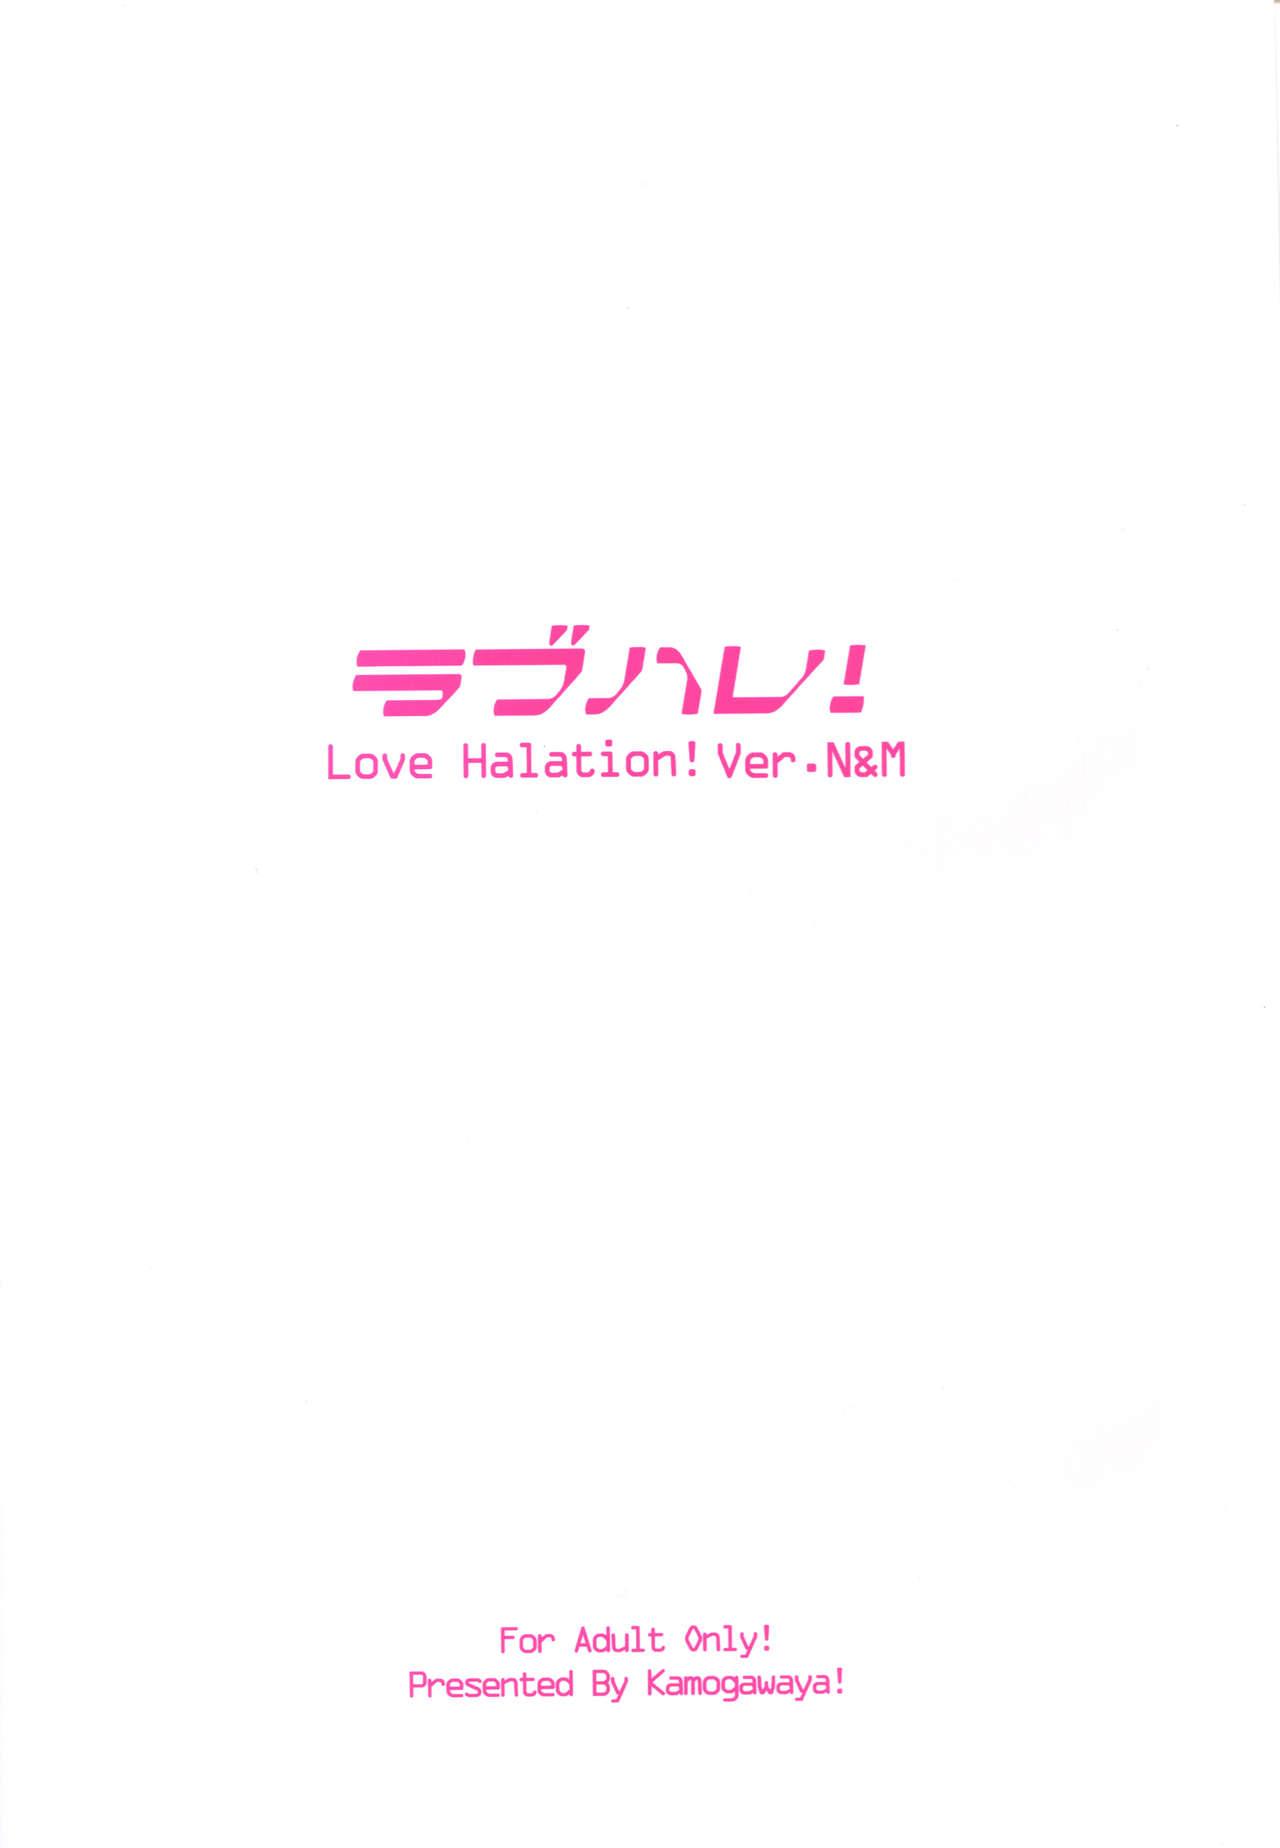 Pick Up LoveHala! Love Halation! Ver.N&M - Love live Rubdown - Picture 2